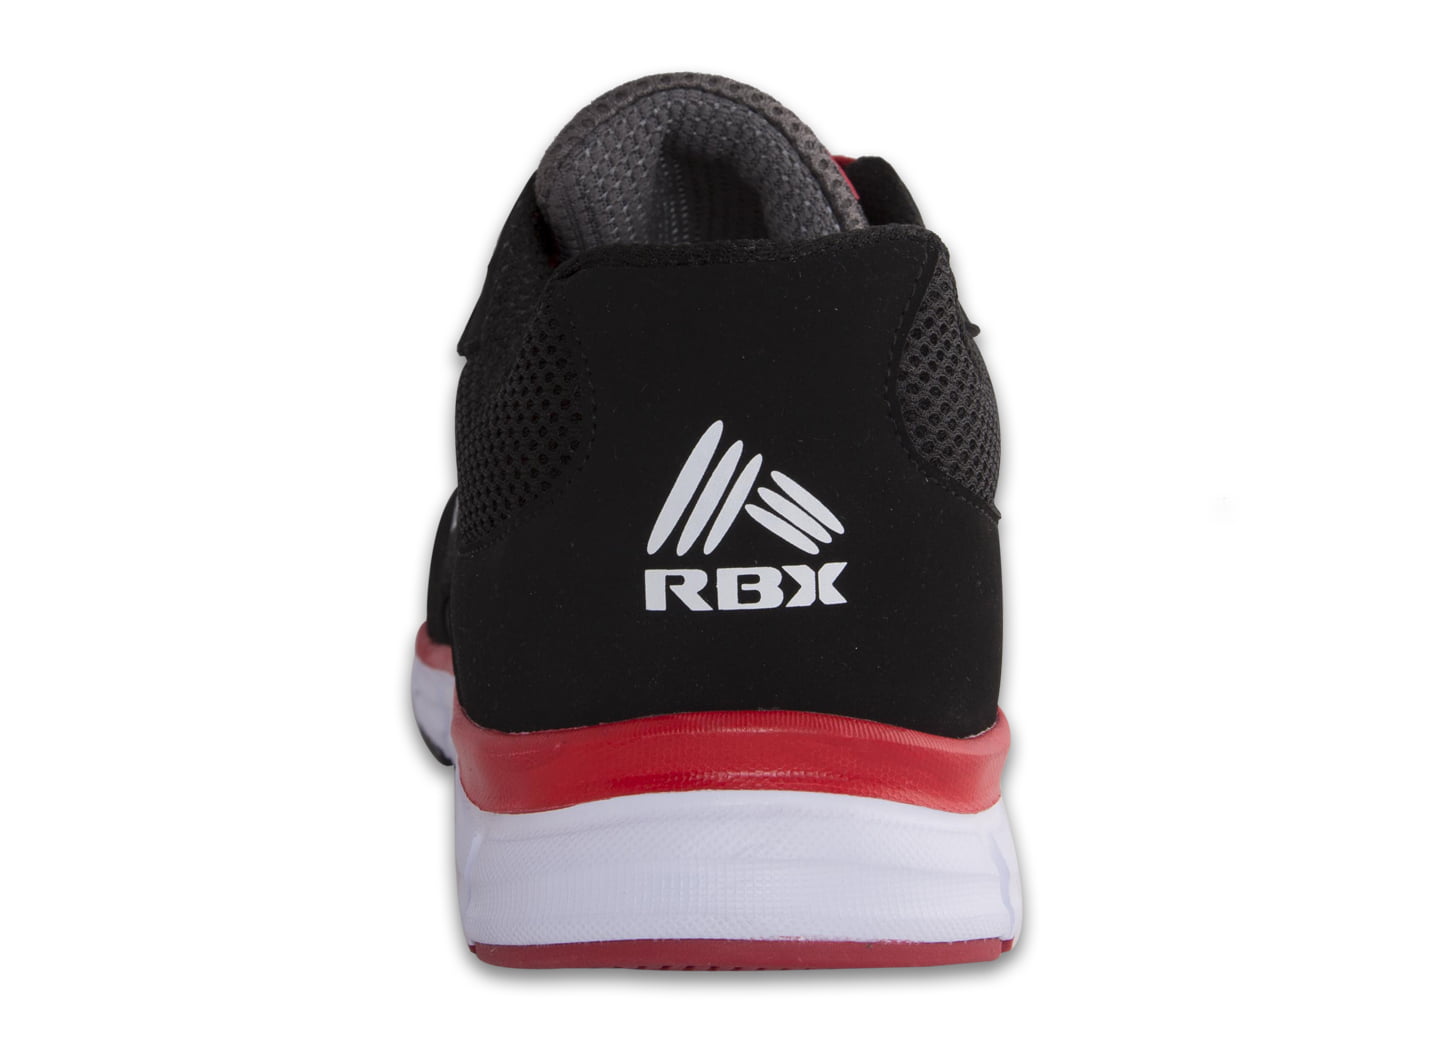 Rbx Rbx Active Men S Traditional Mesh Ventilated Shoe Walmart Com Walmart Com - rbx shoes wiki